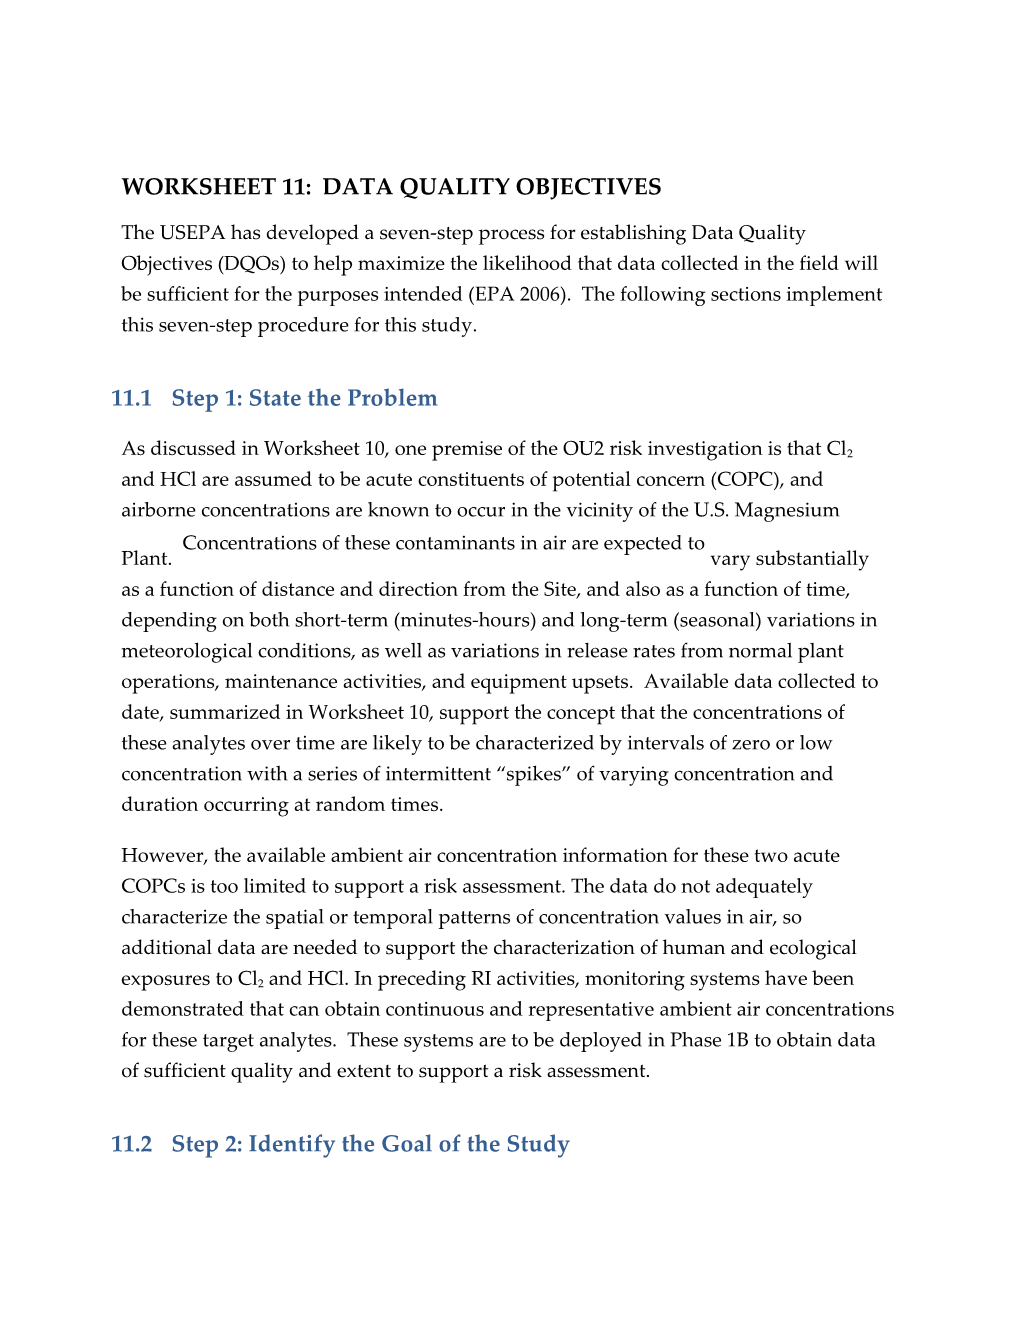 Worksheet 11: Data Quality Objectives